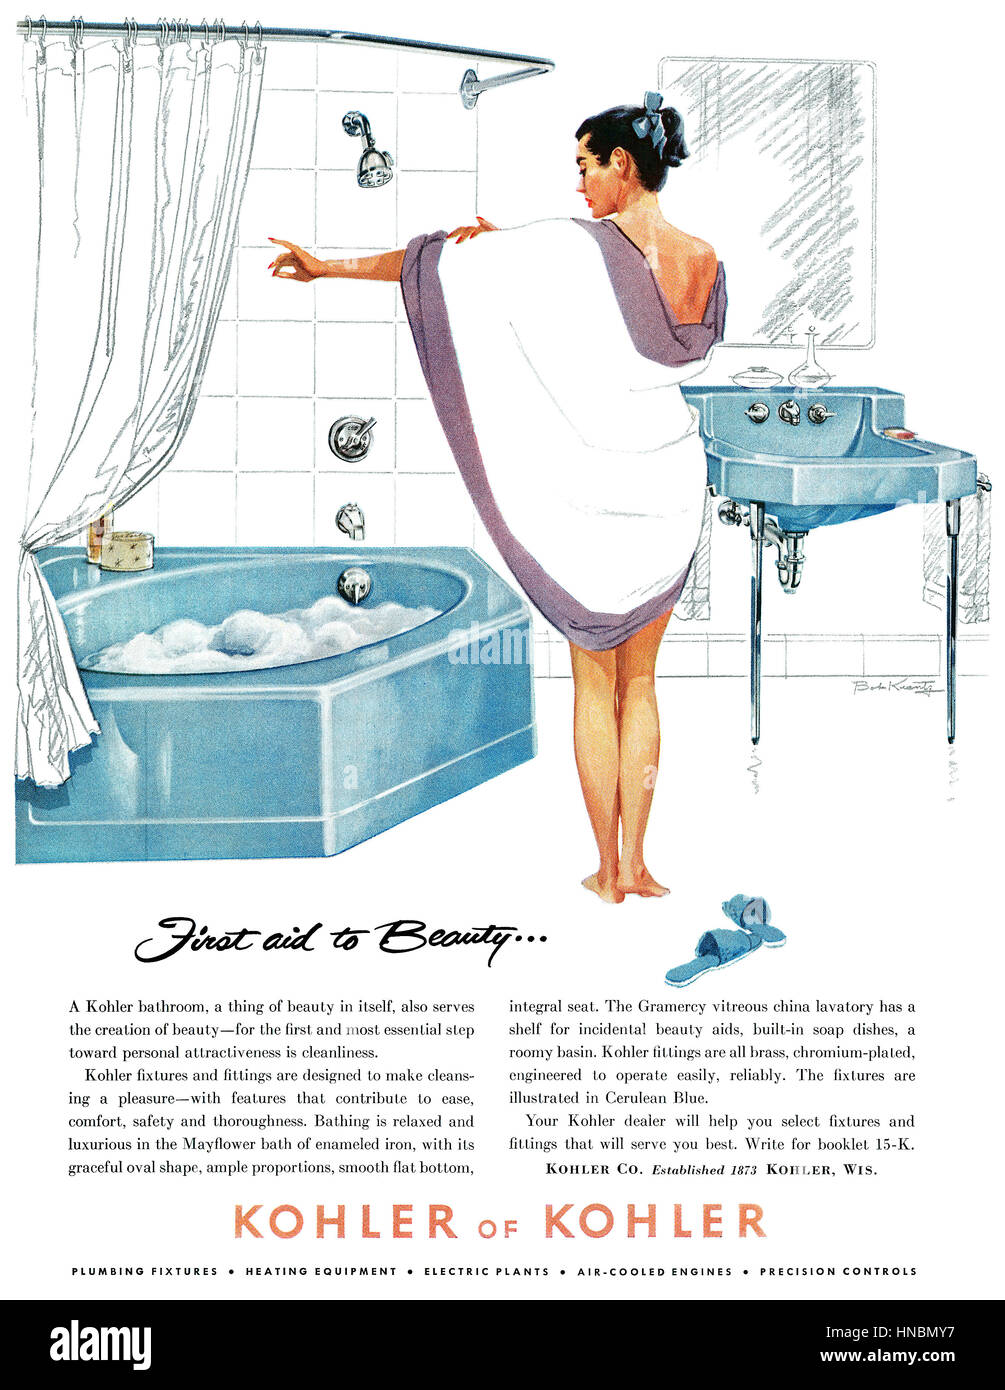 1957 U.S. pubblicità per Kohler Sanitari Foto stock - Alamy